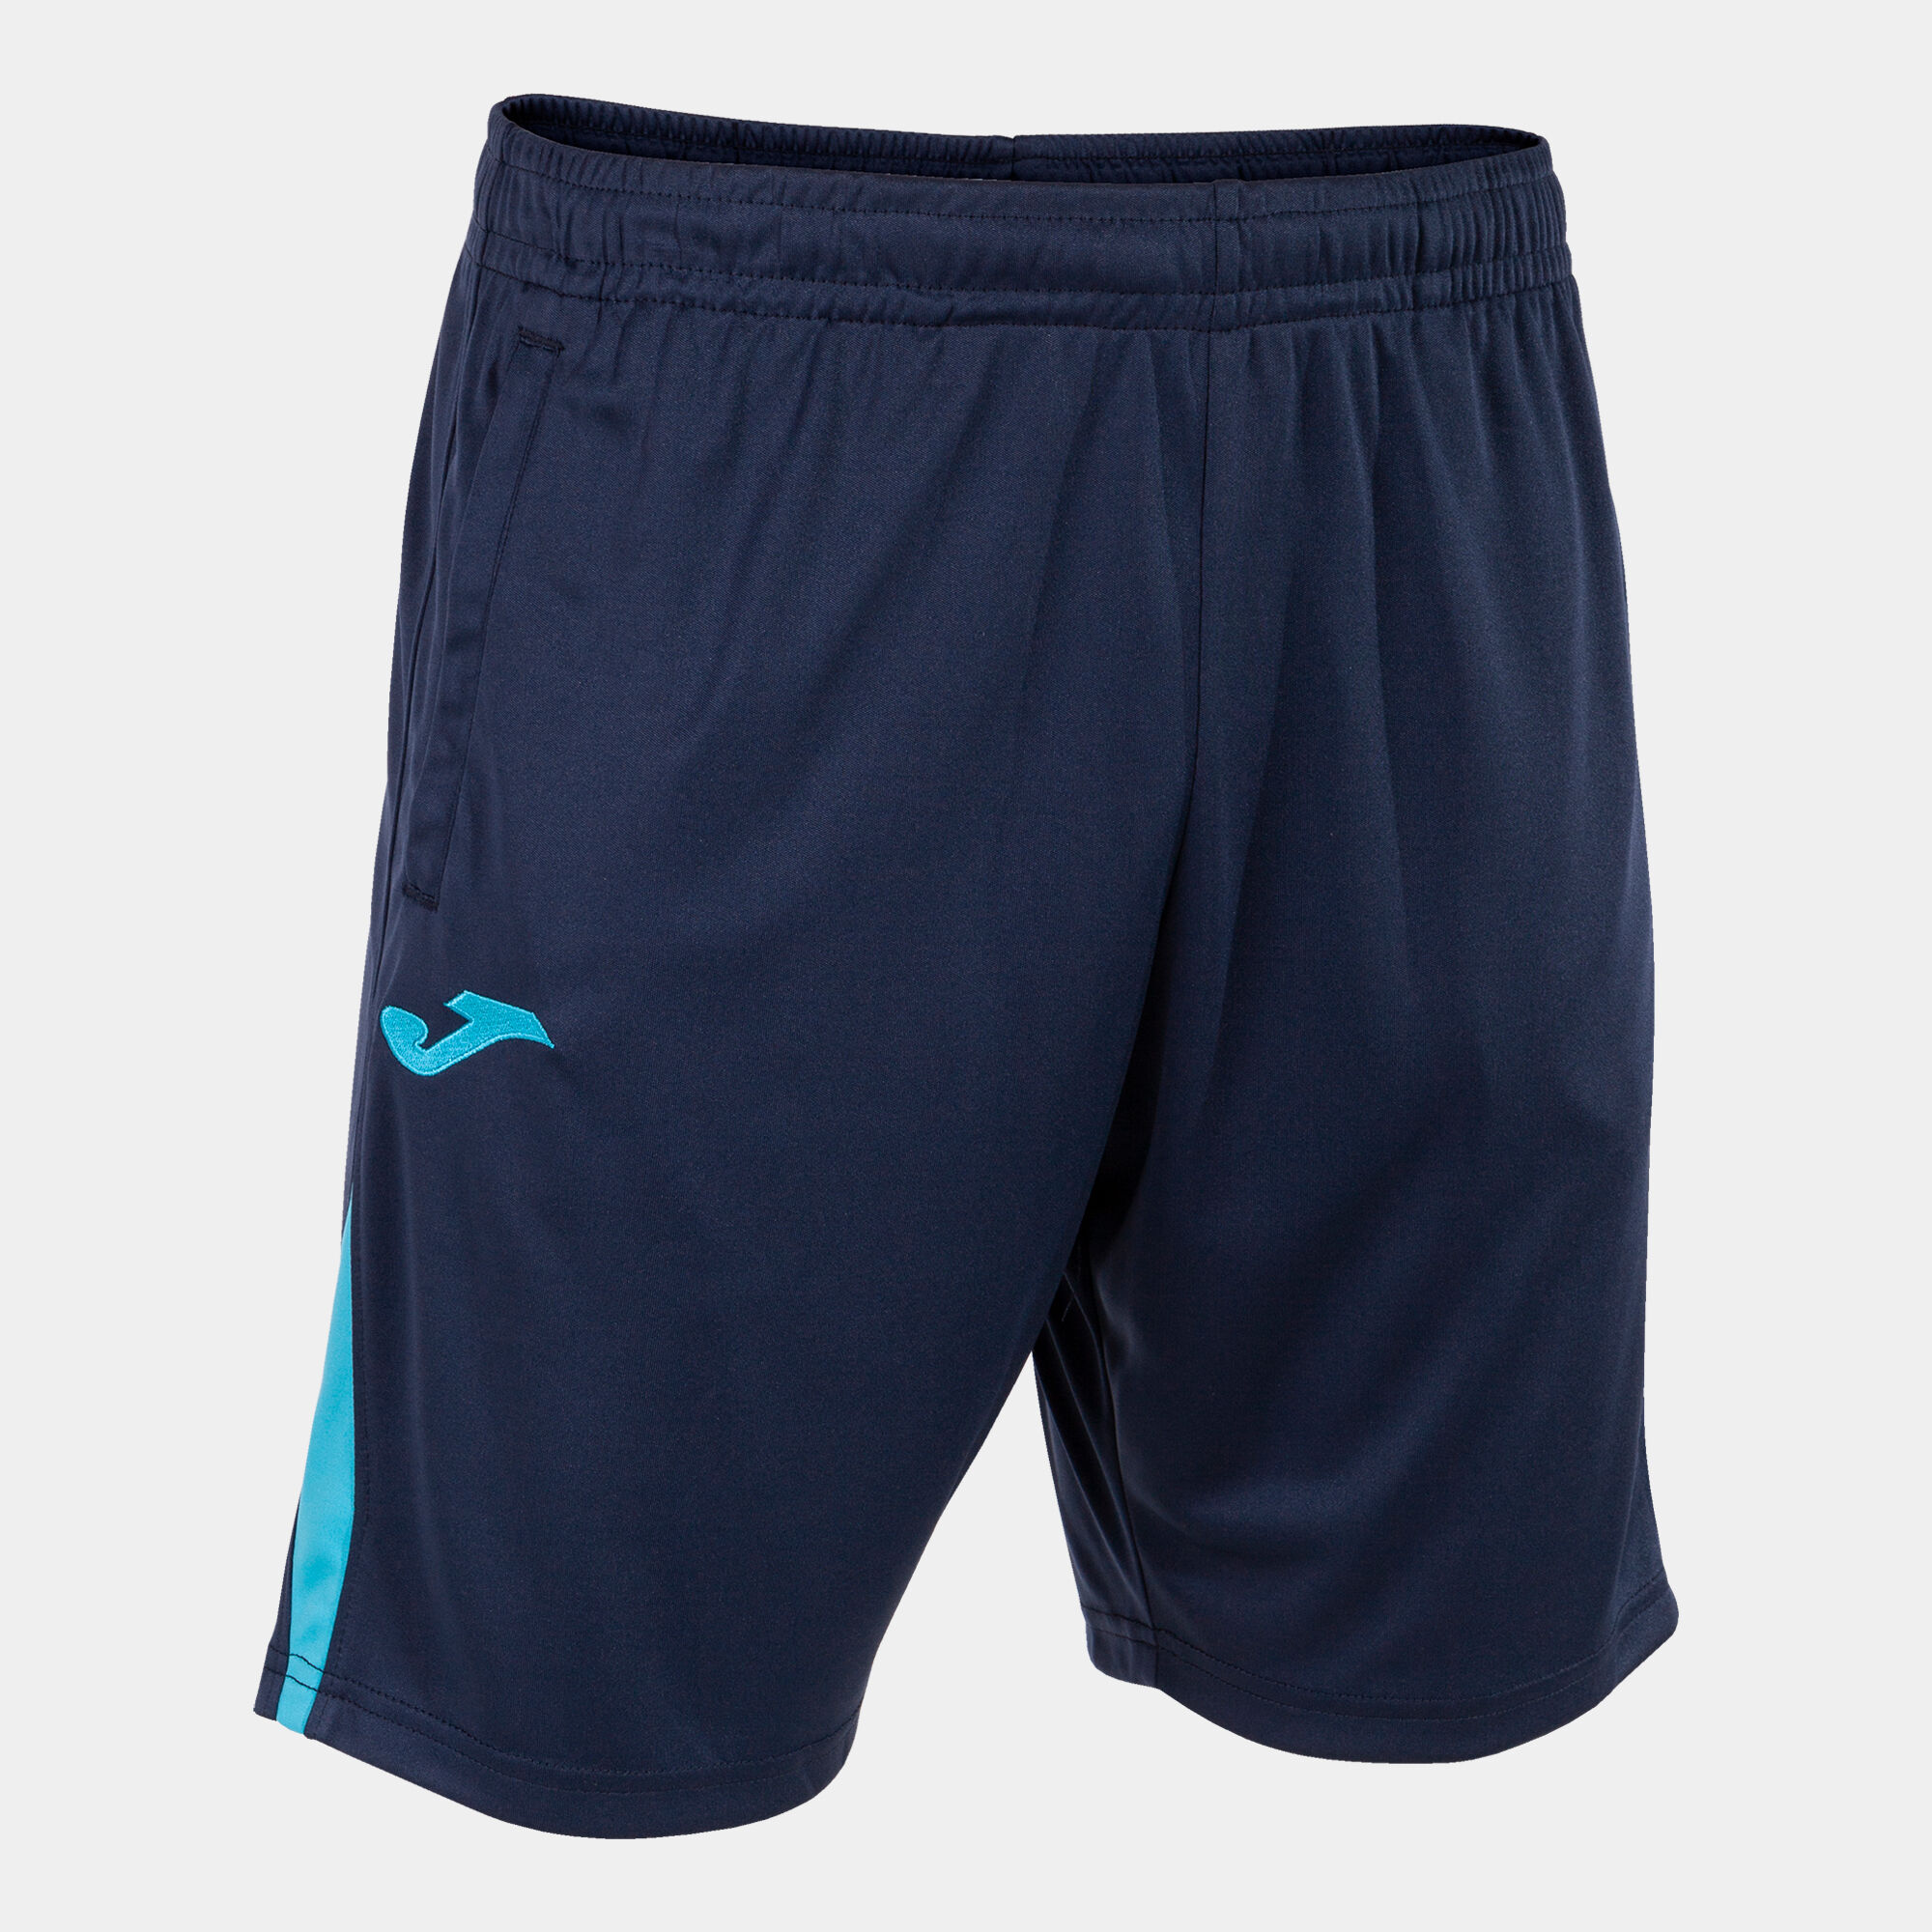 Bermuda shorts man Championship VII navy blue fluorescent turquoise